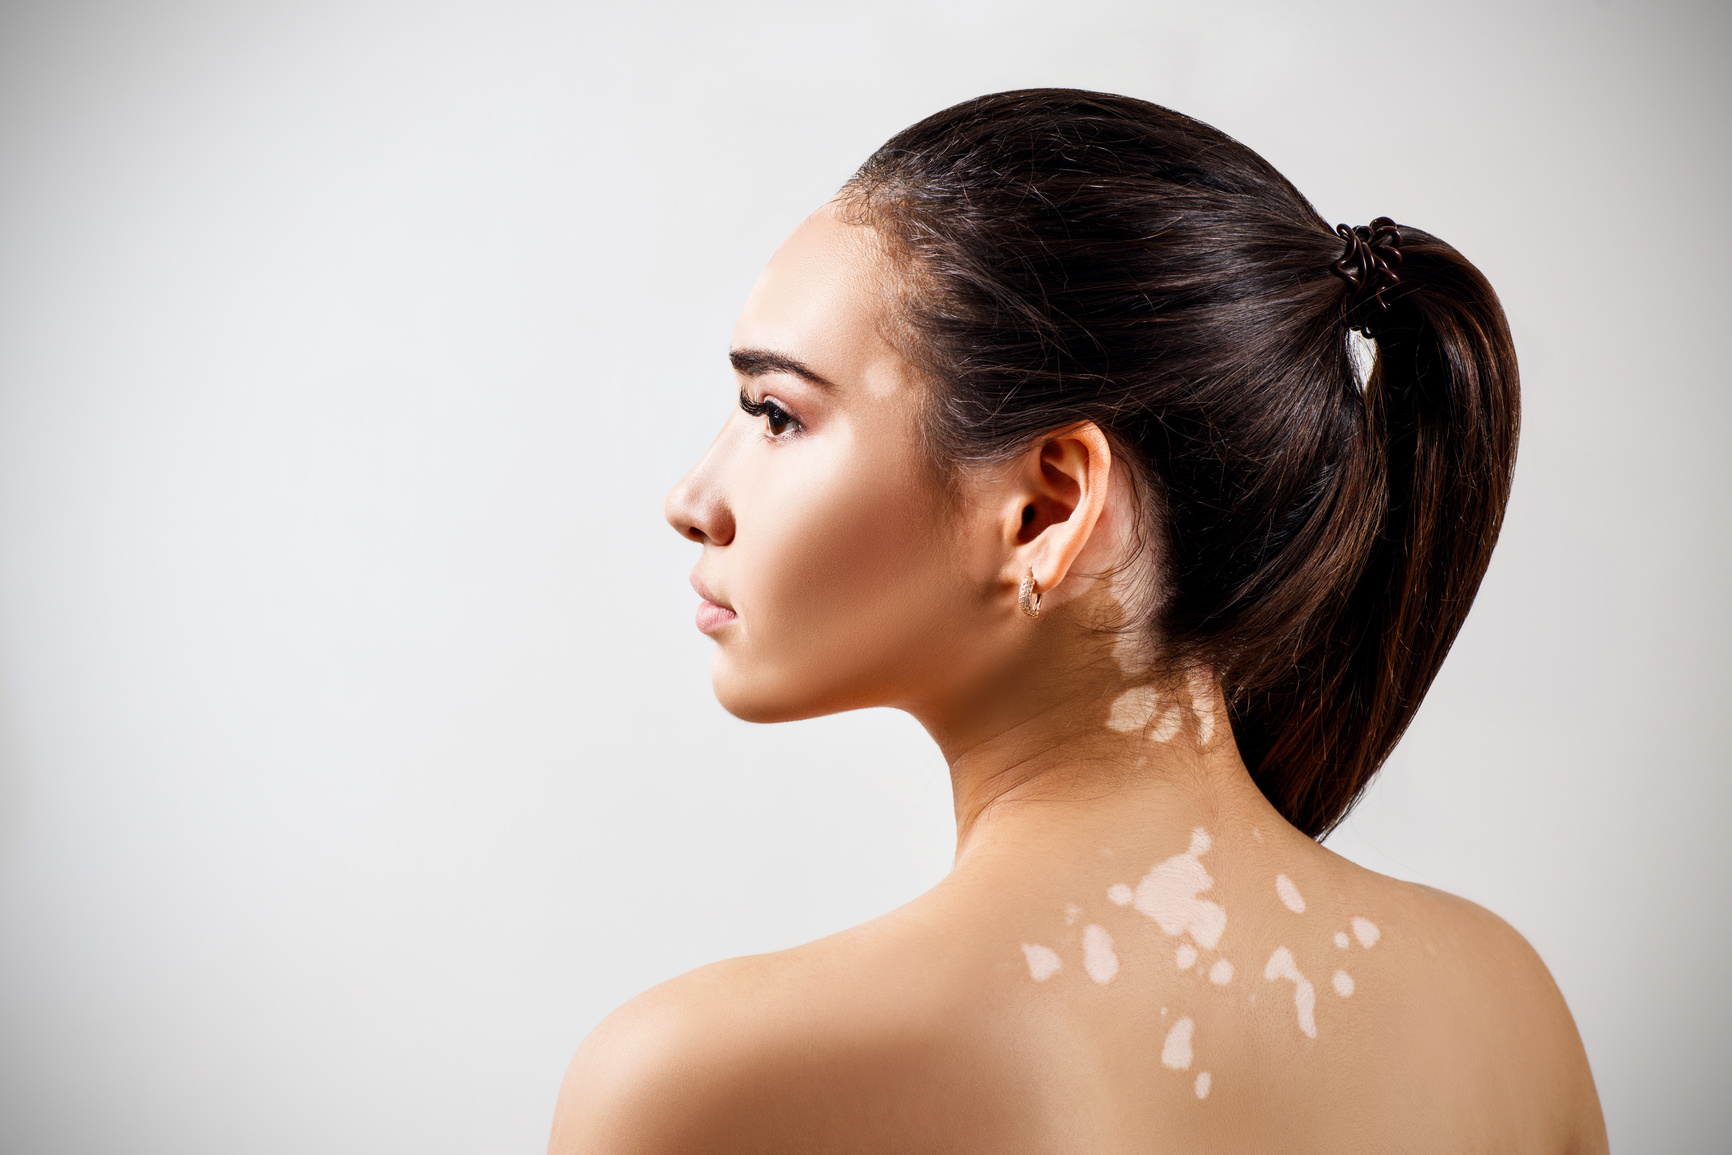 Portrait of young woman with vitiligo